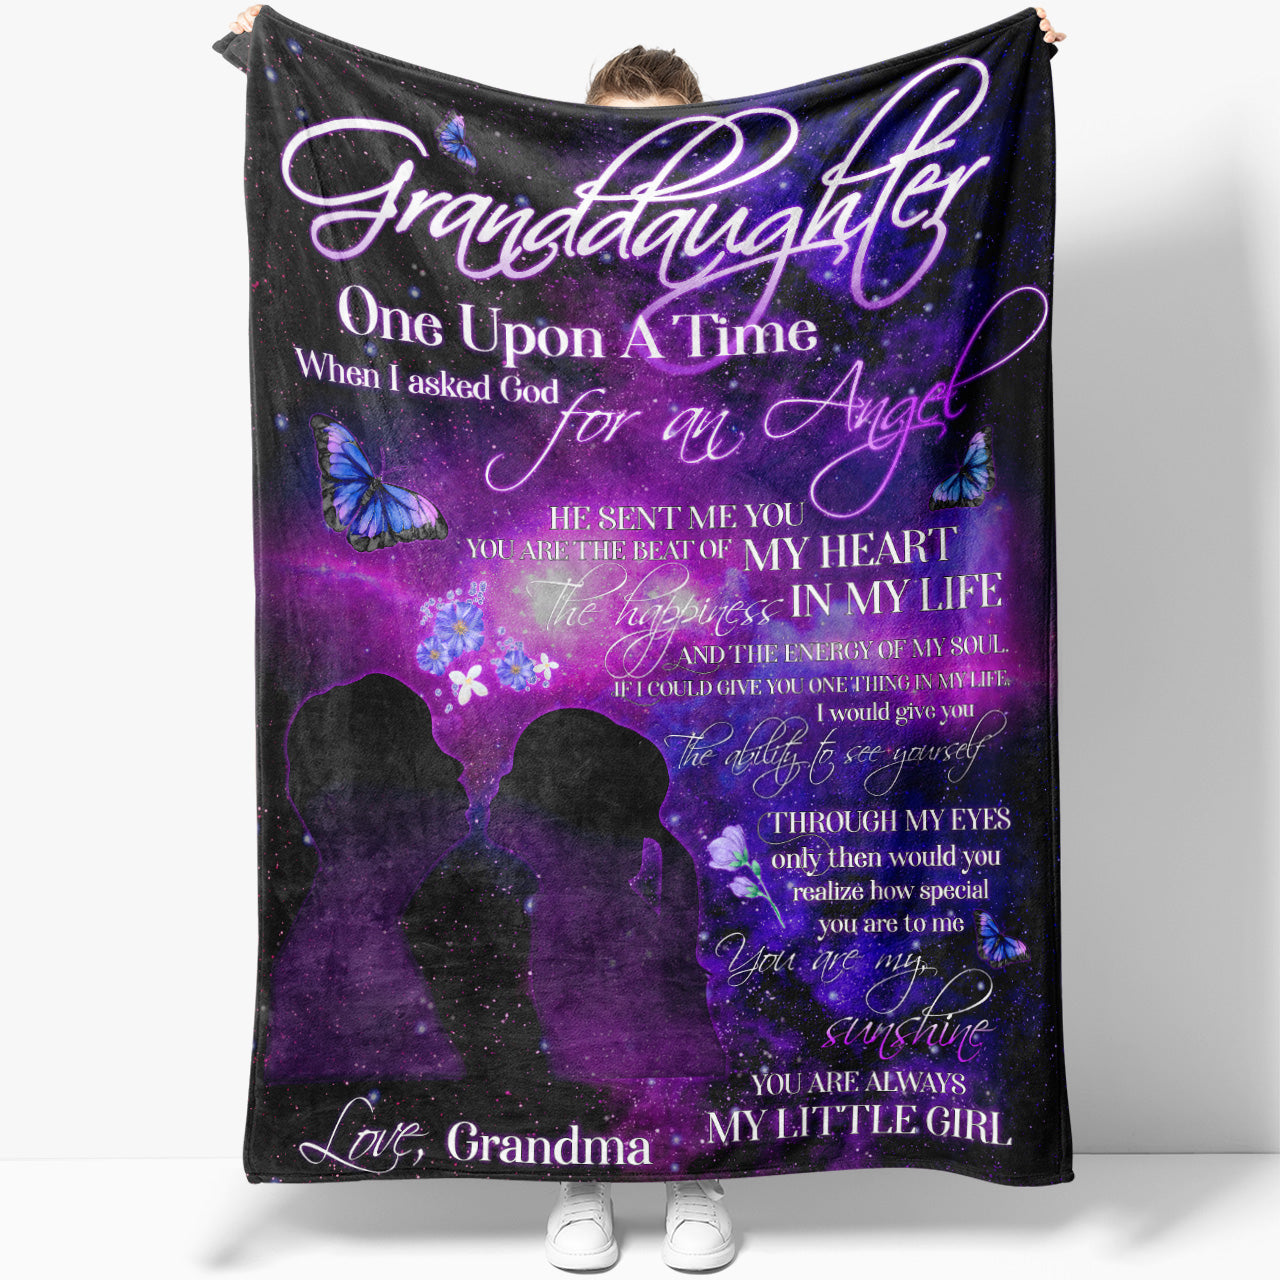 Blanket Gift Ideas For Granddaughter, I Asked Gof for An Angel He Sent Me My Dranddaughter Blanket